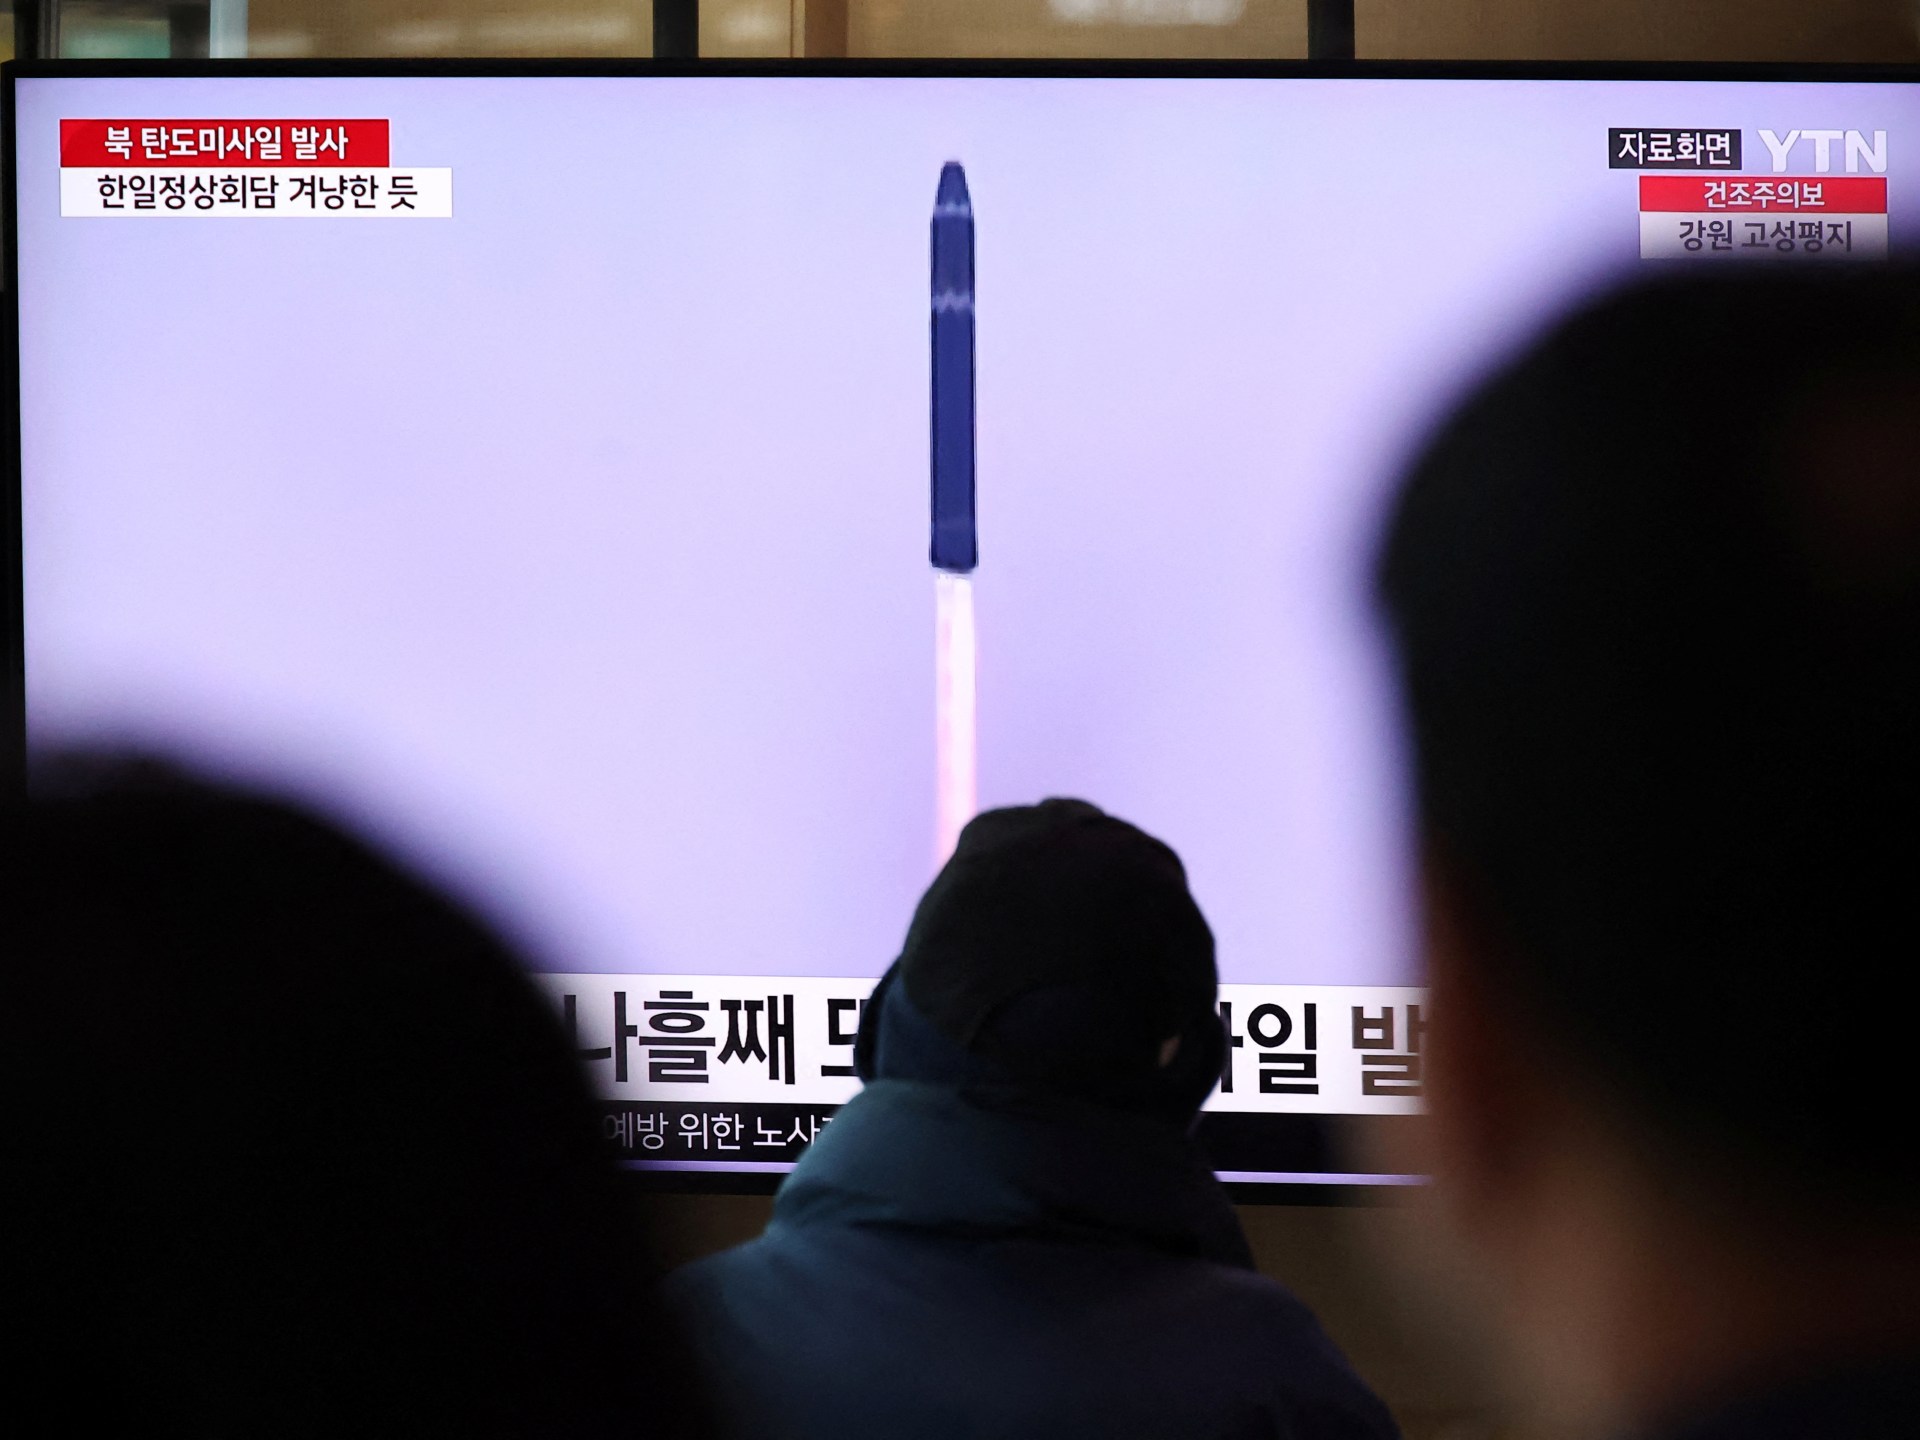 N Korea fires ballistic missile towards sea, say S Korea, Japan | Weapons News